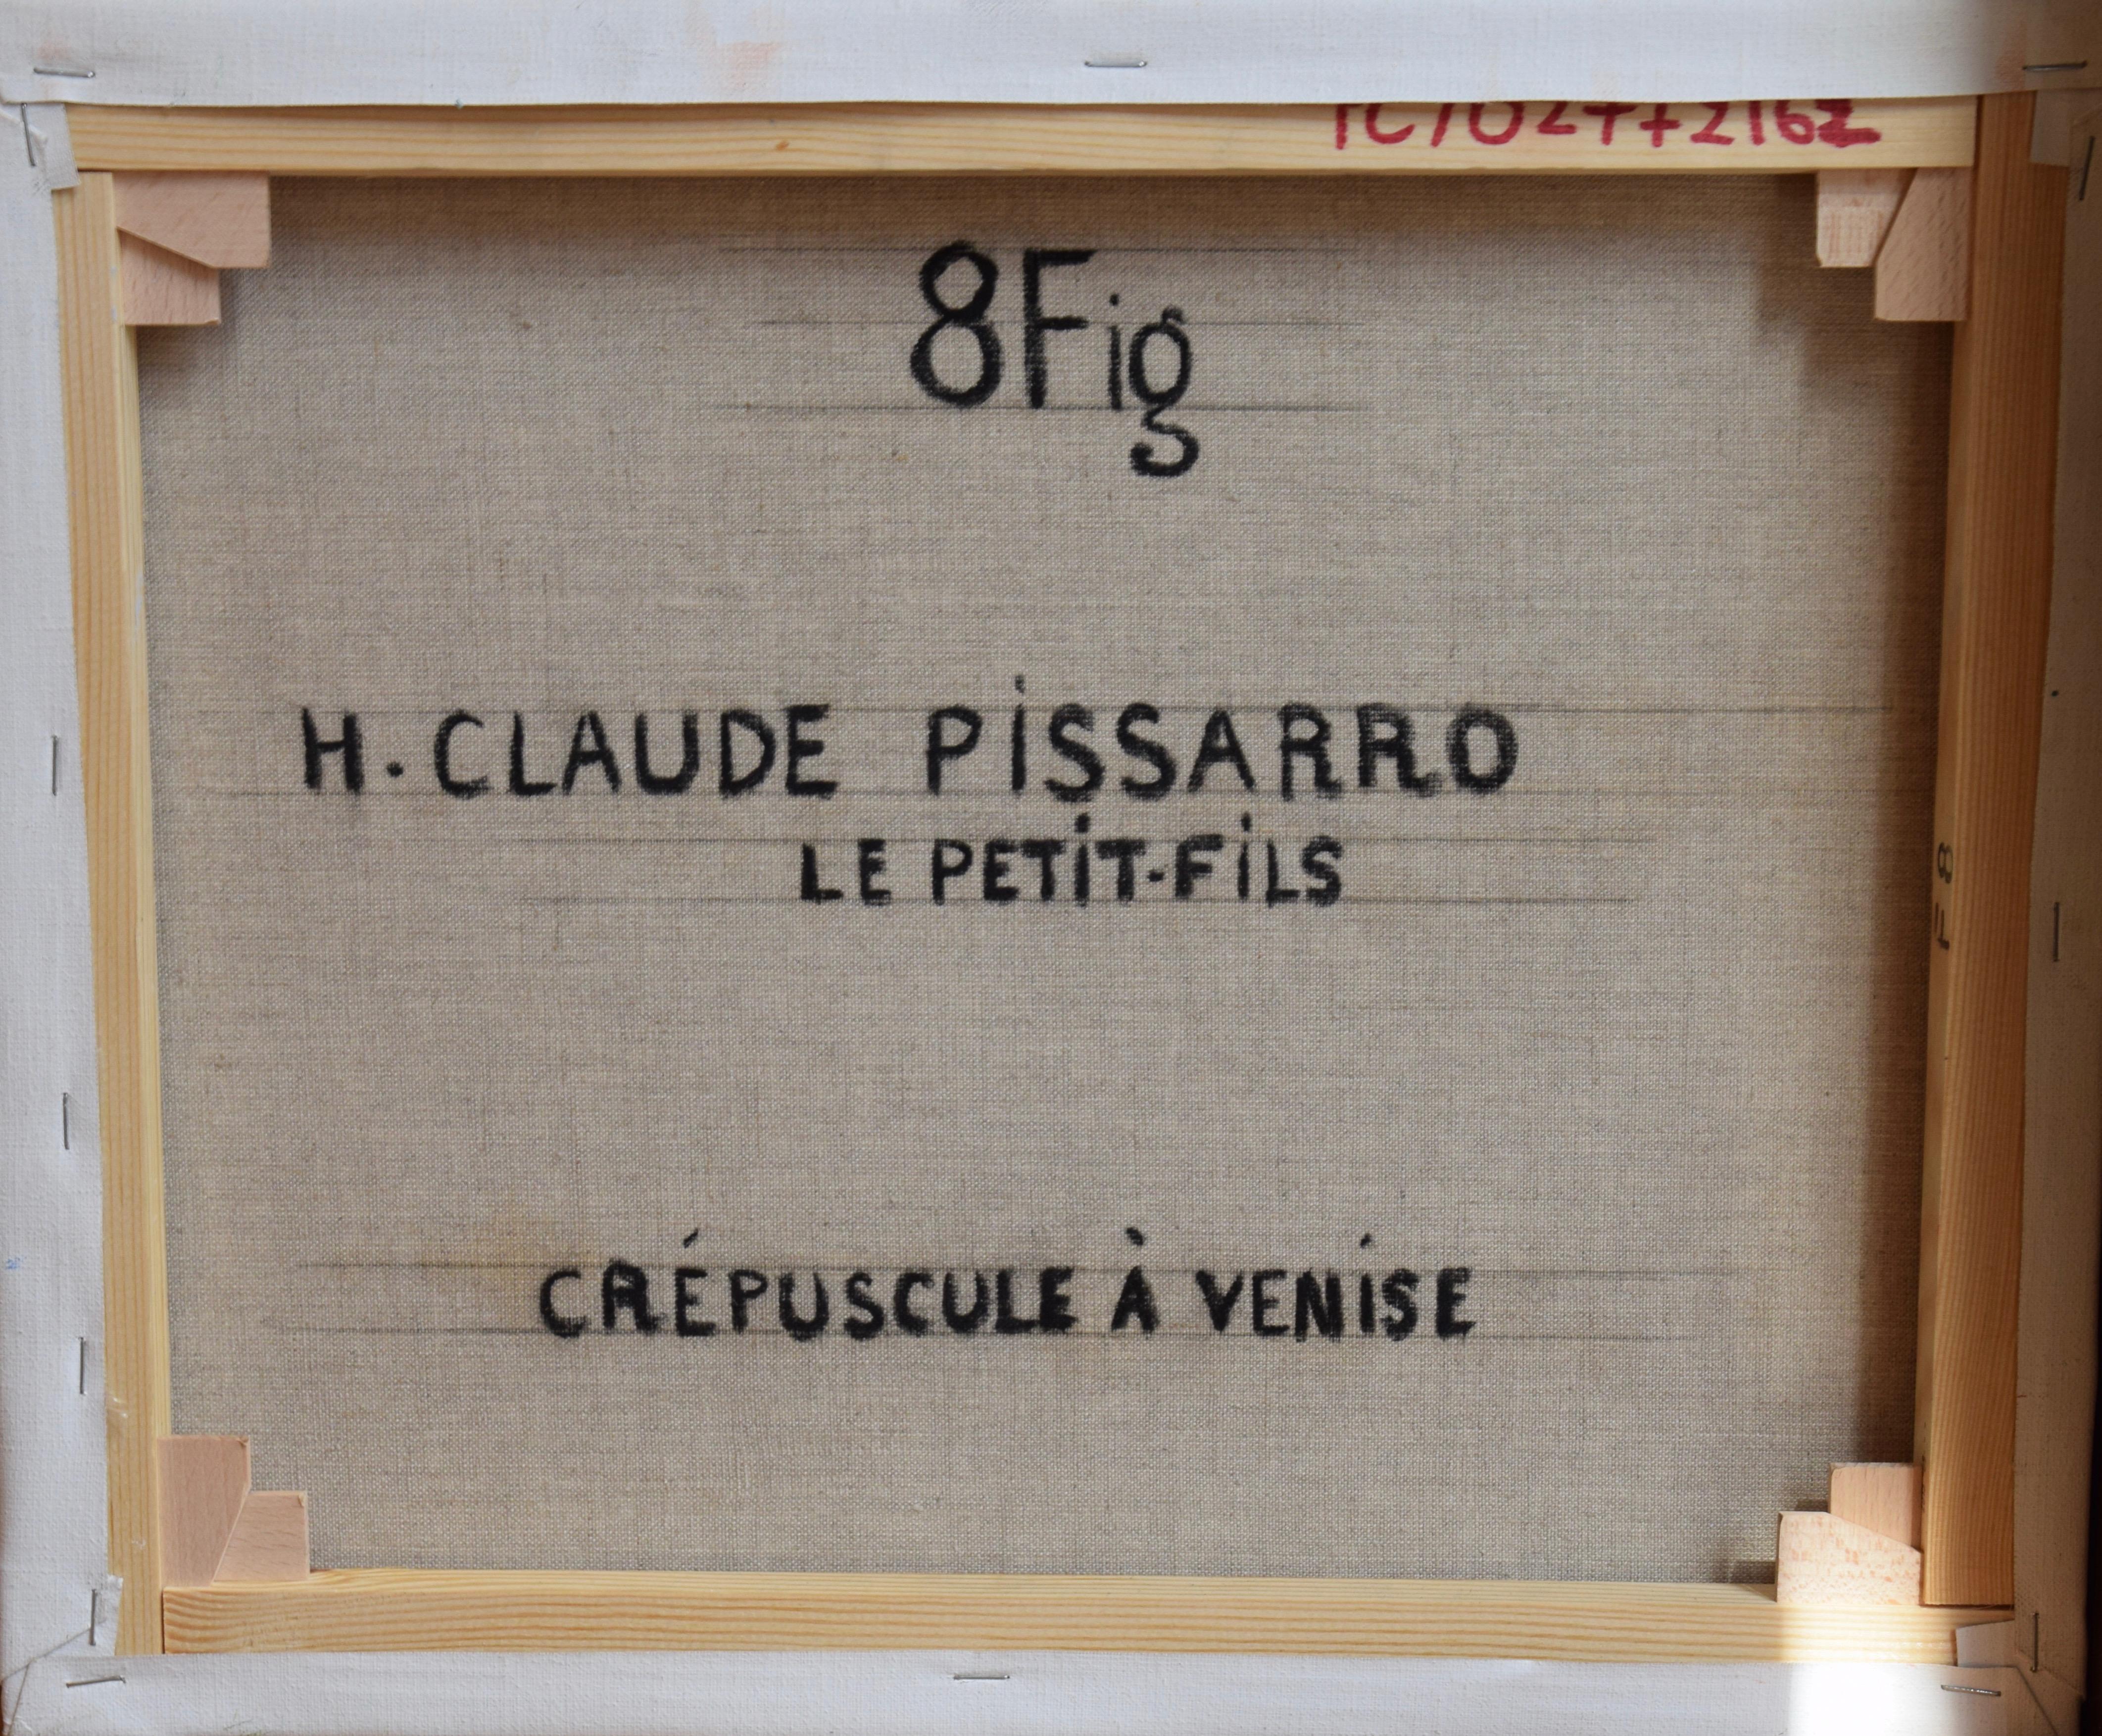 Crépuscule à Venise von H. CLAUDE PISSARRO - Gemälde im postimpressionistischen Stil (Post-Impressionismus), Painting, von Hughes Claude Pissarro